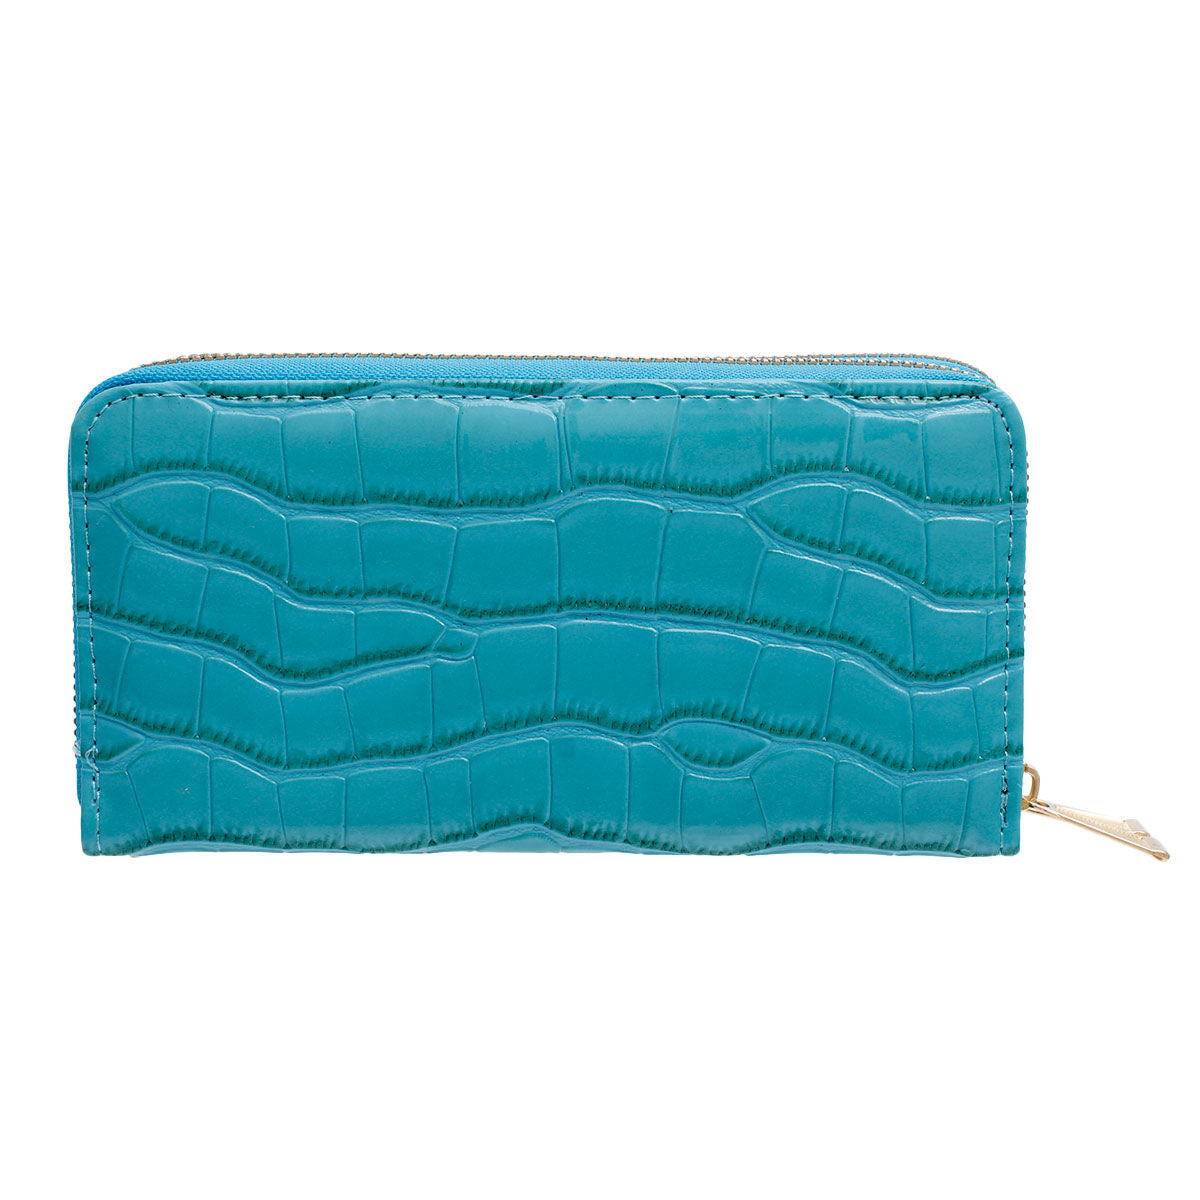 Aqua Croc Double Zipper Wallet: Stylish Vegan Leather Accessory